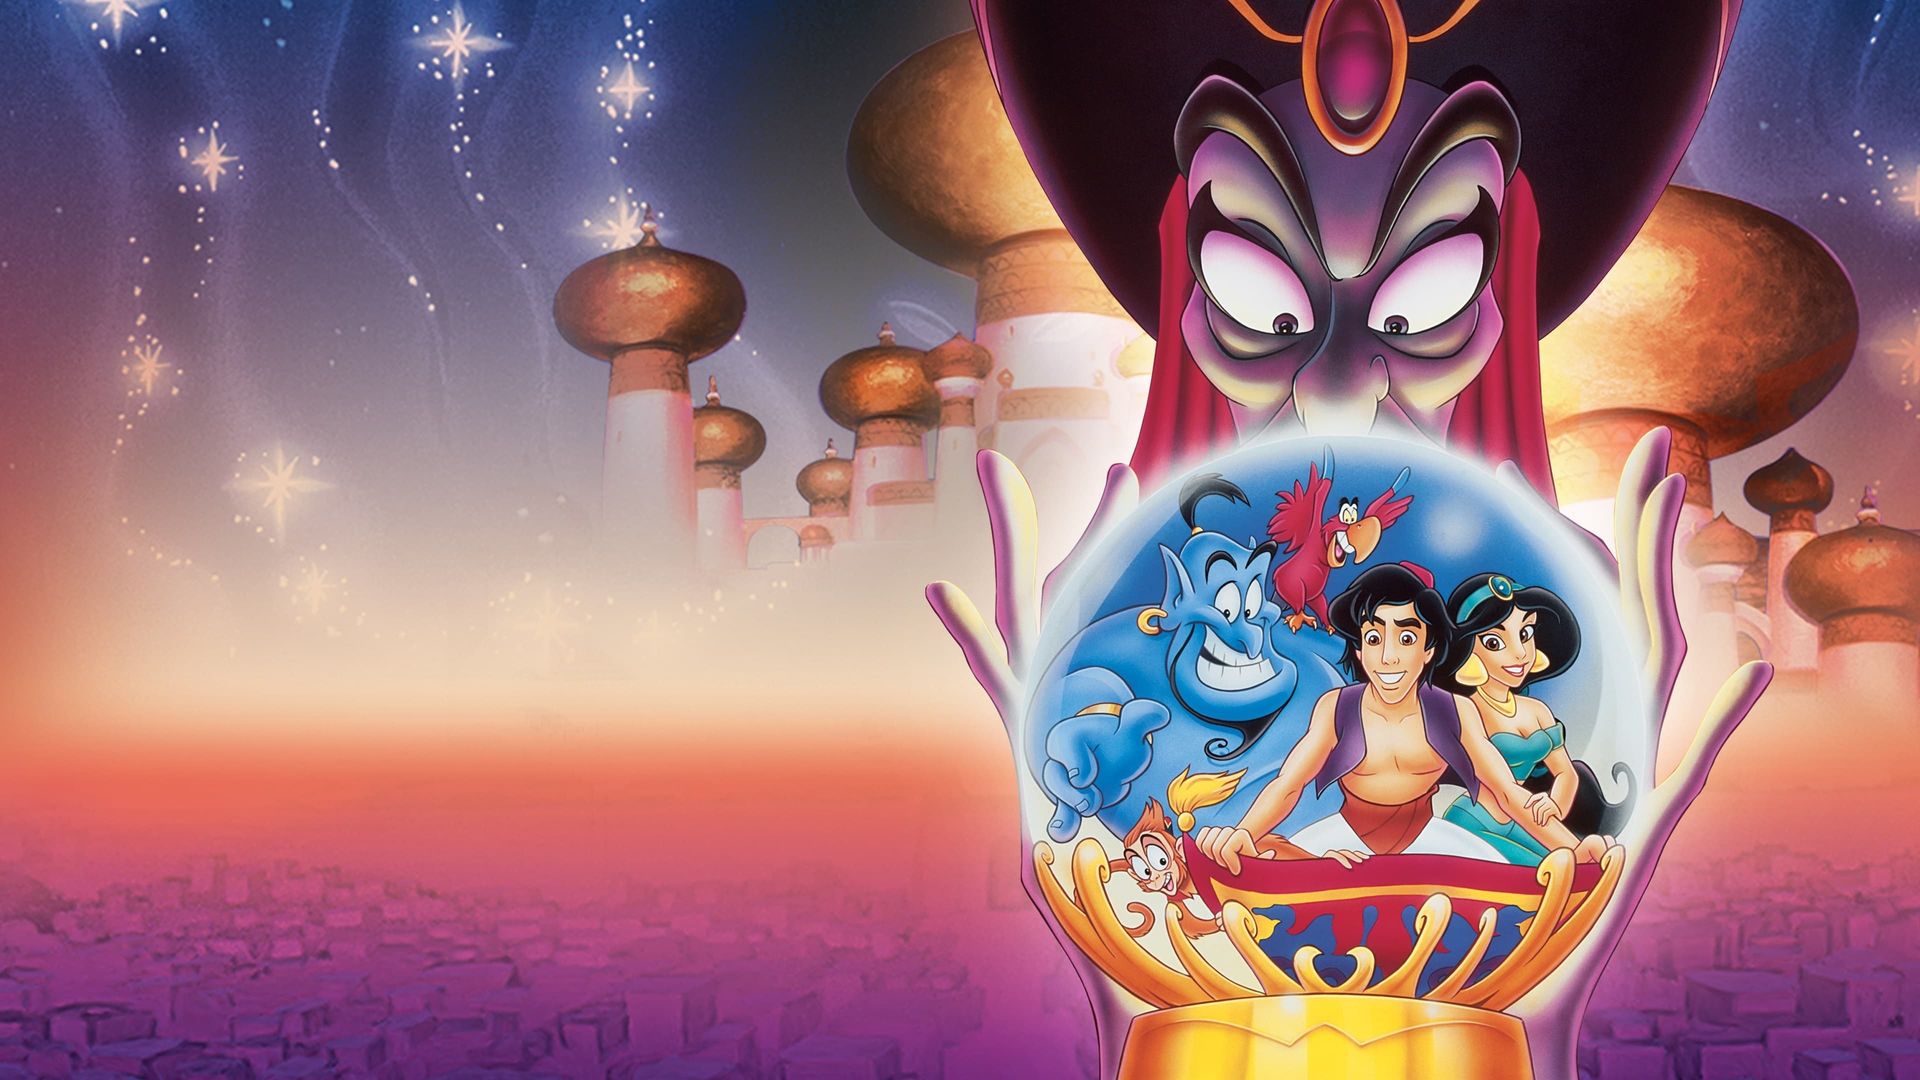 Aladdin 2: The Return of Jafar Backdrop